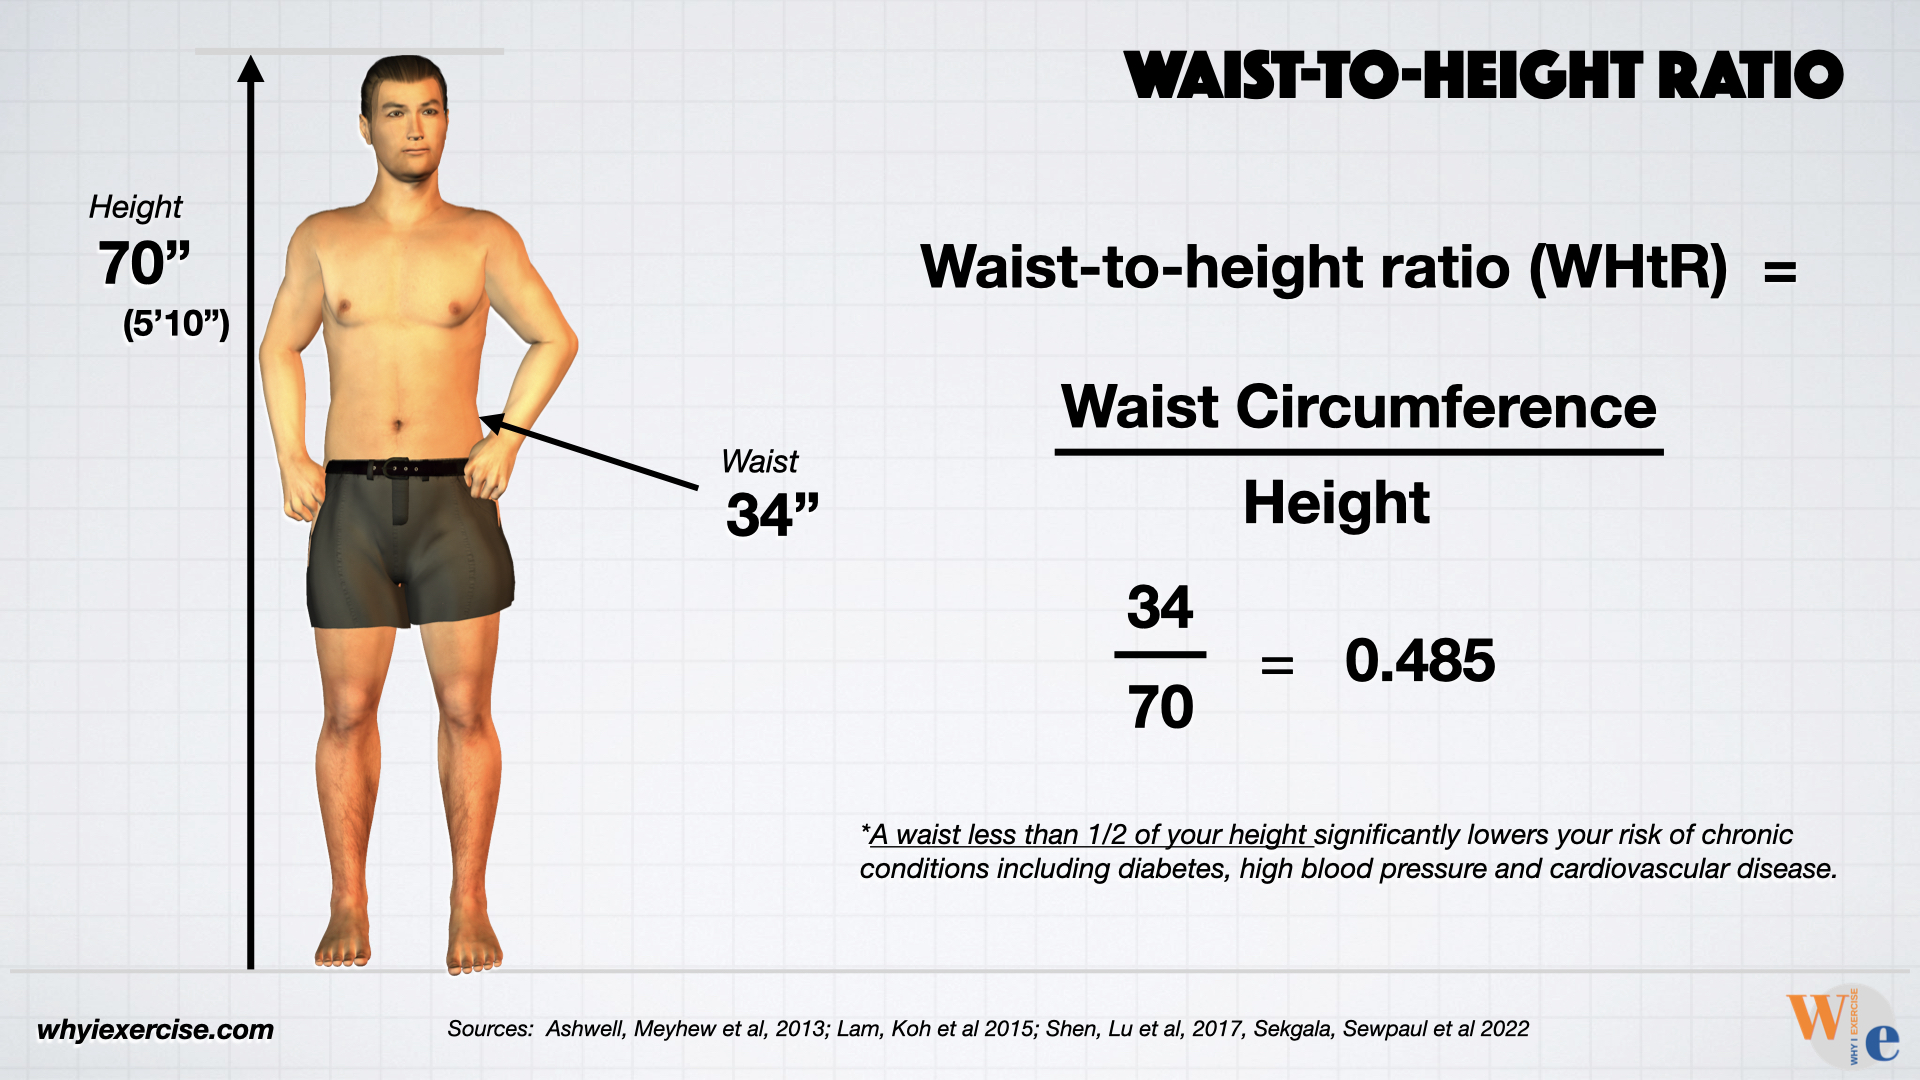 Waist circumference and waist-to-height ratio